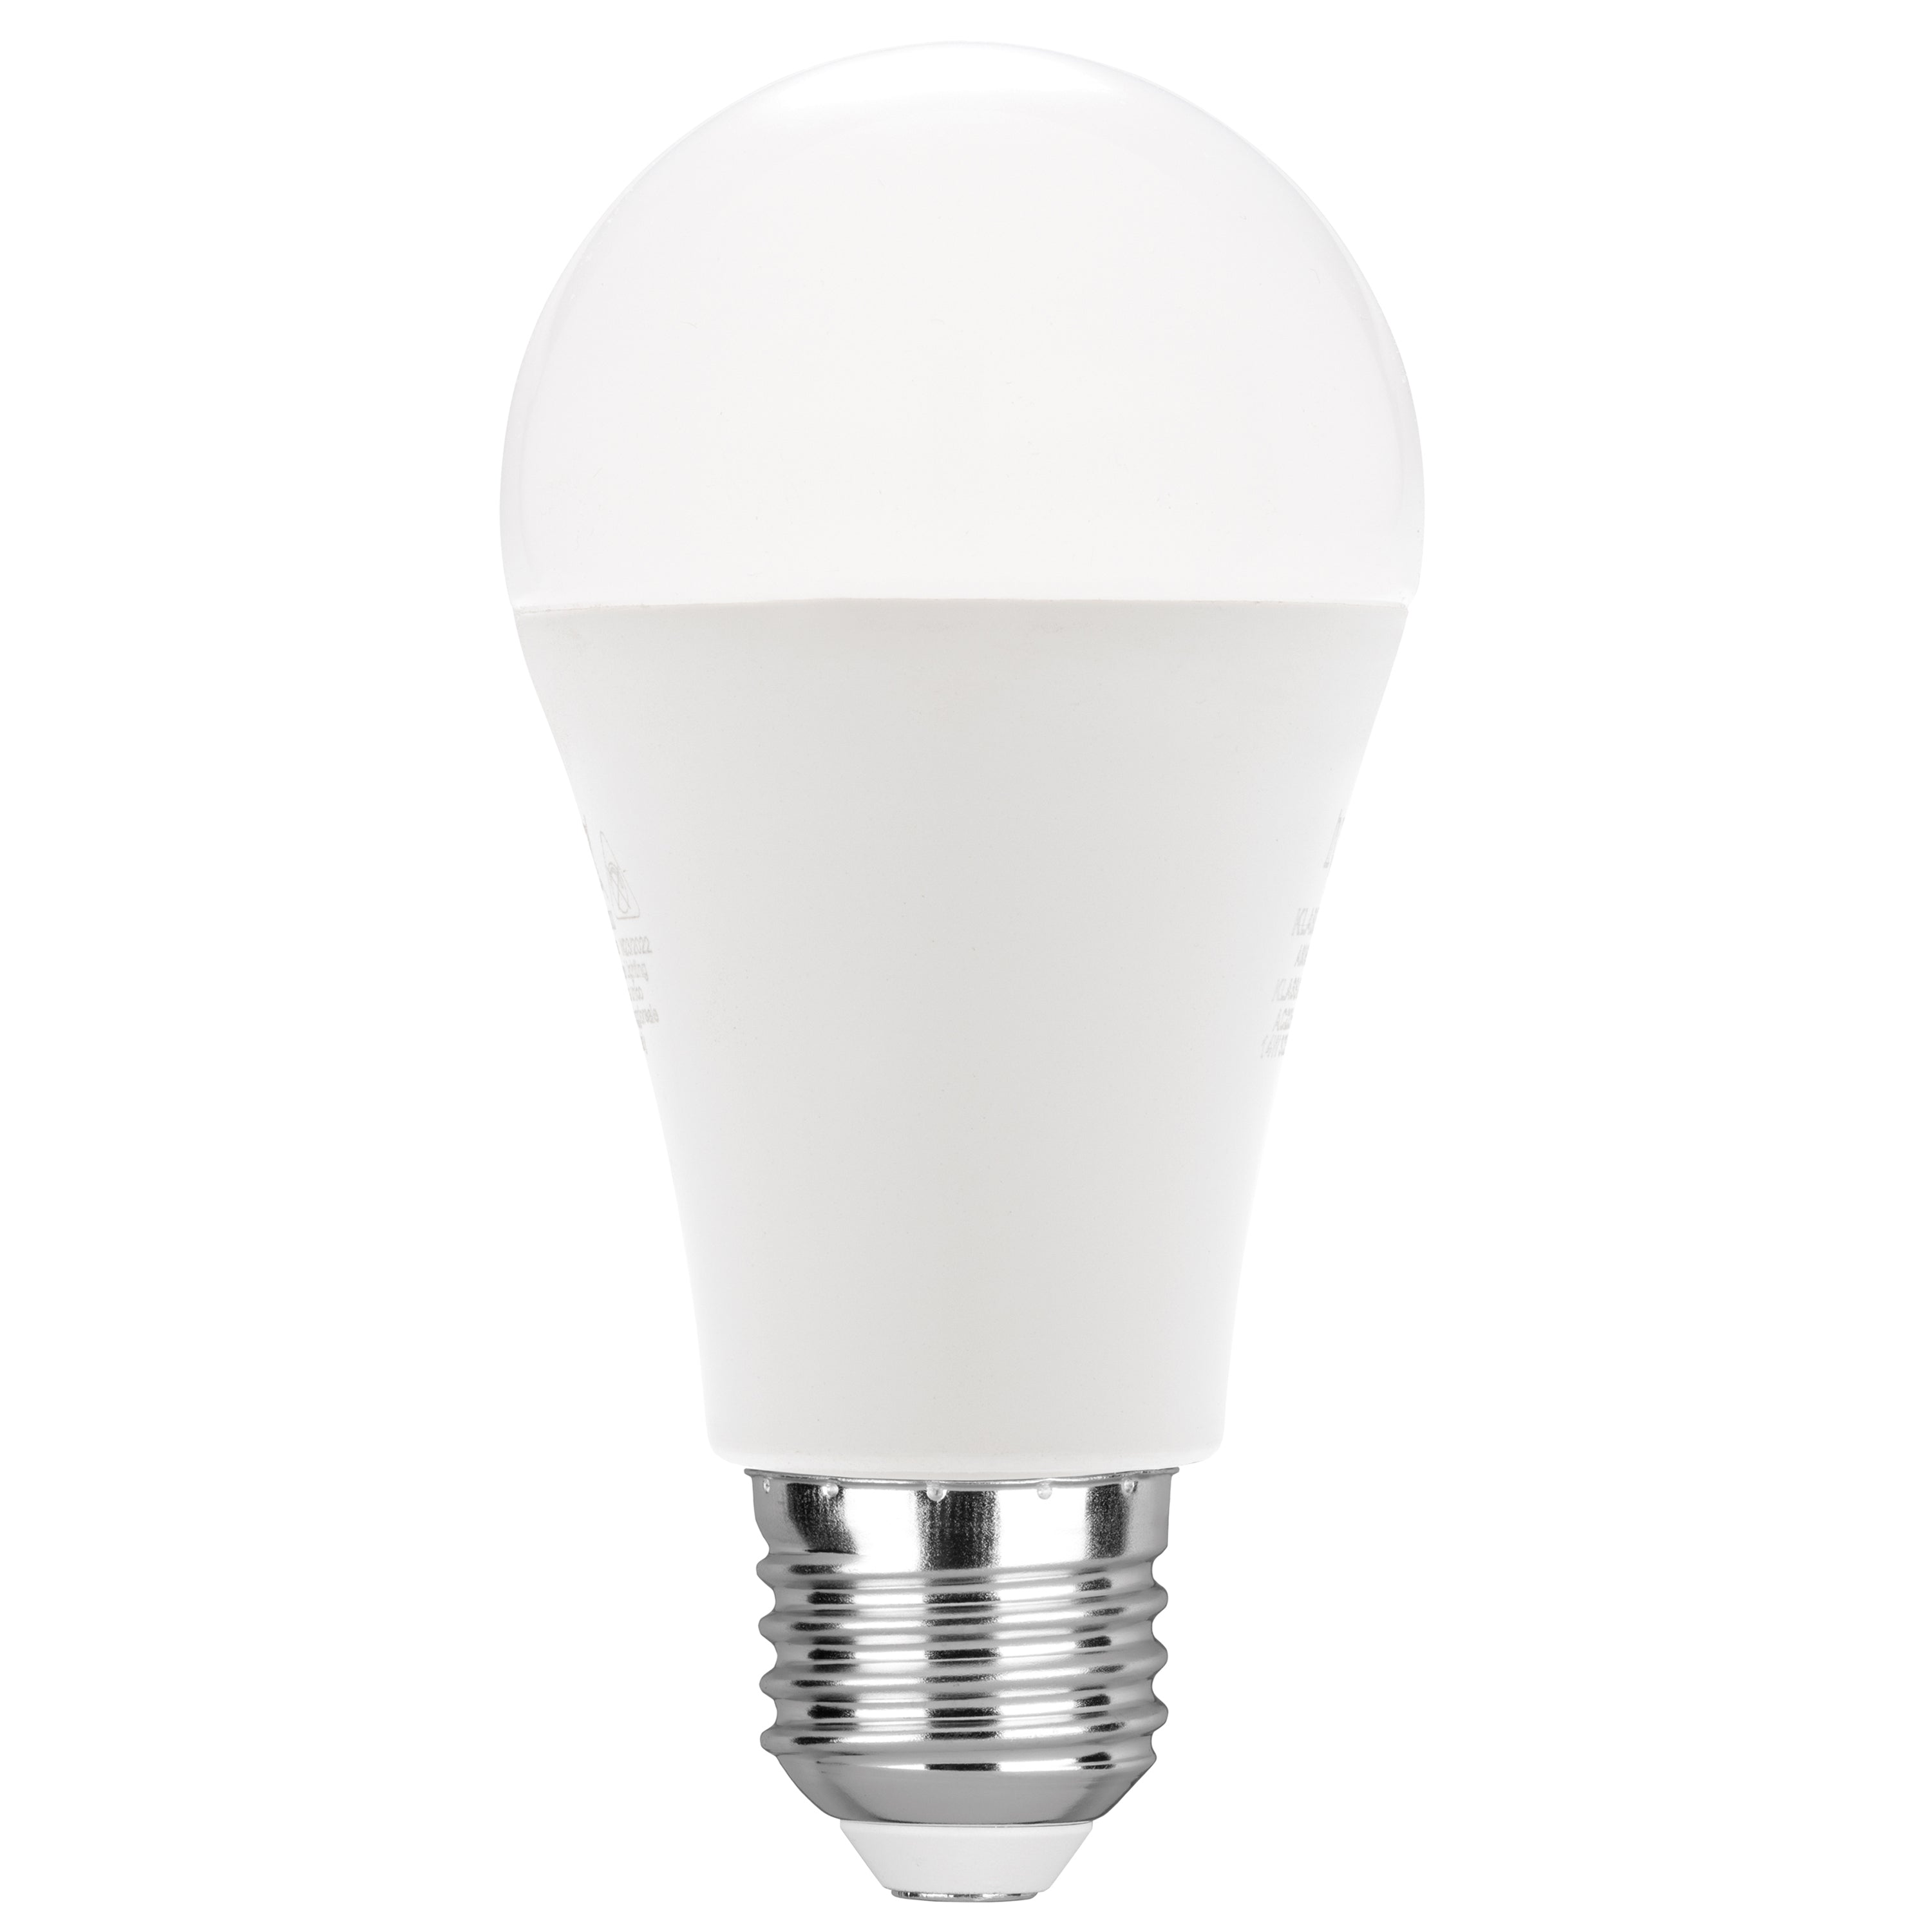 Lampadina LED KLASSIC luce calda 14W E27 1416L 120mm